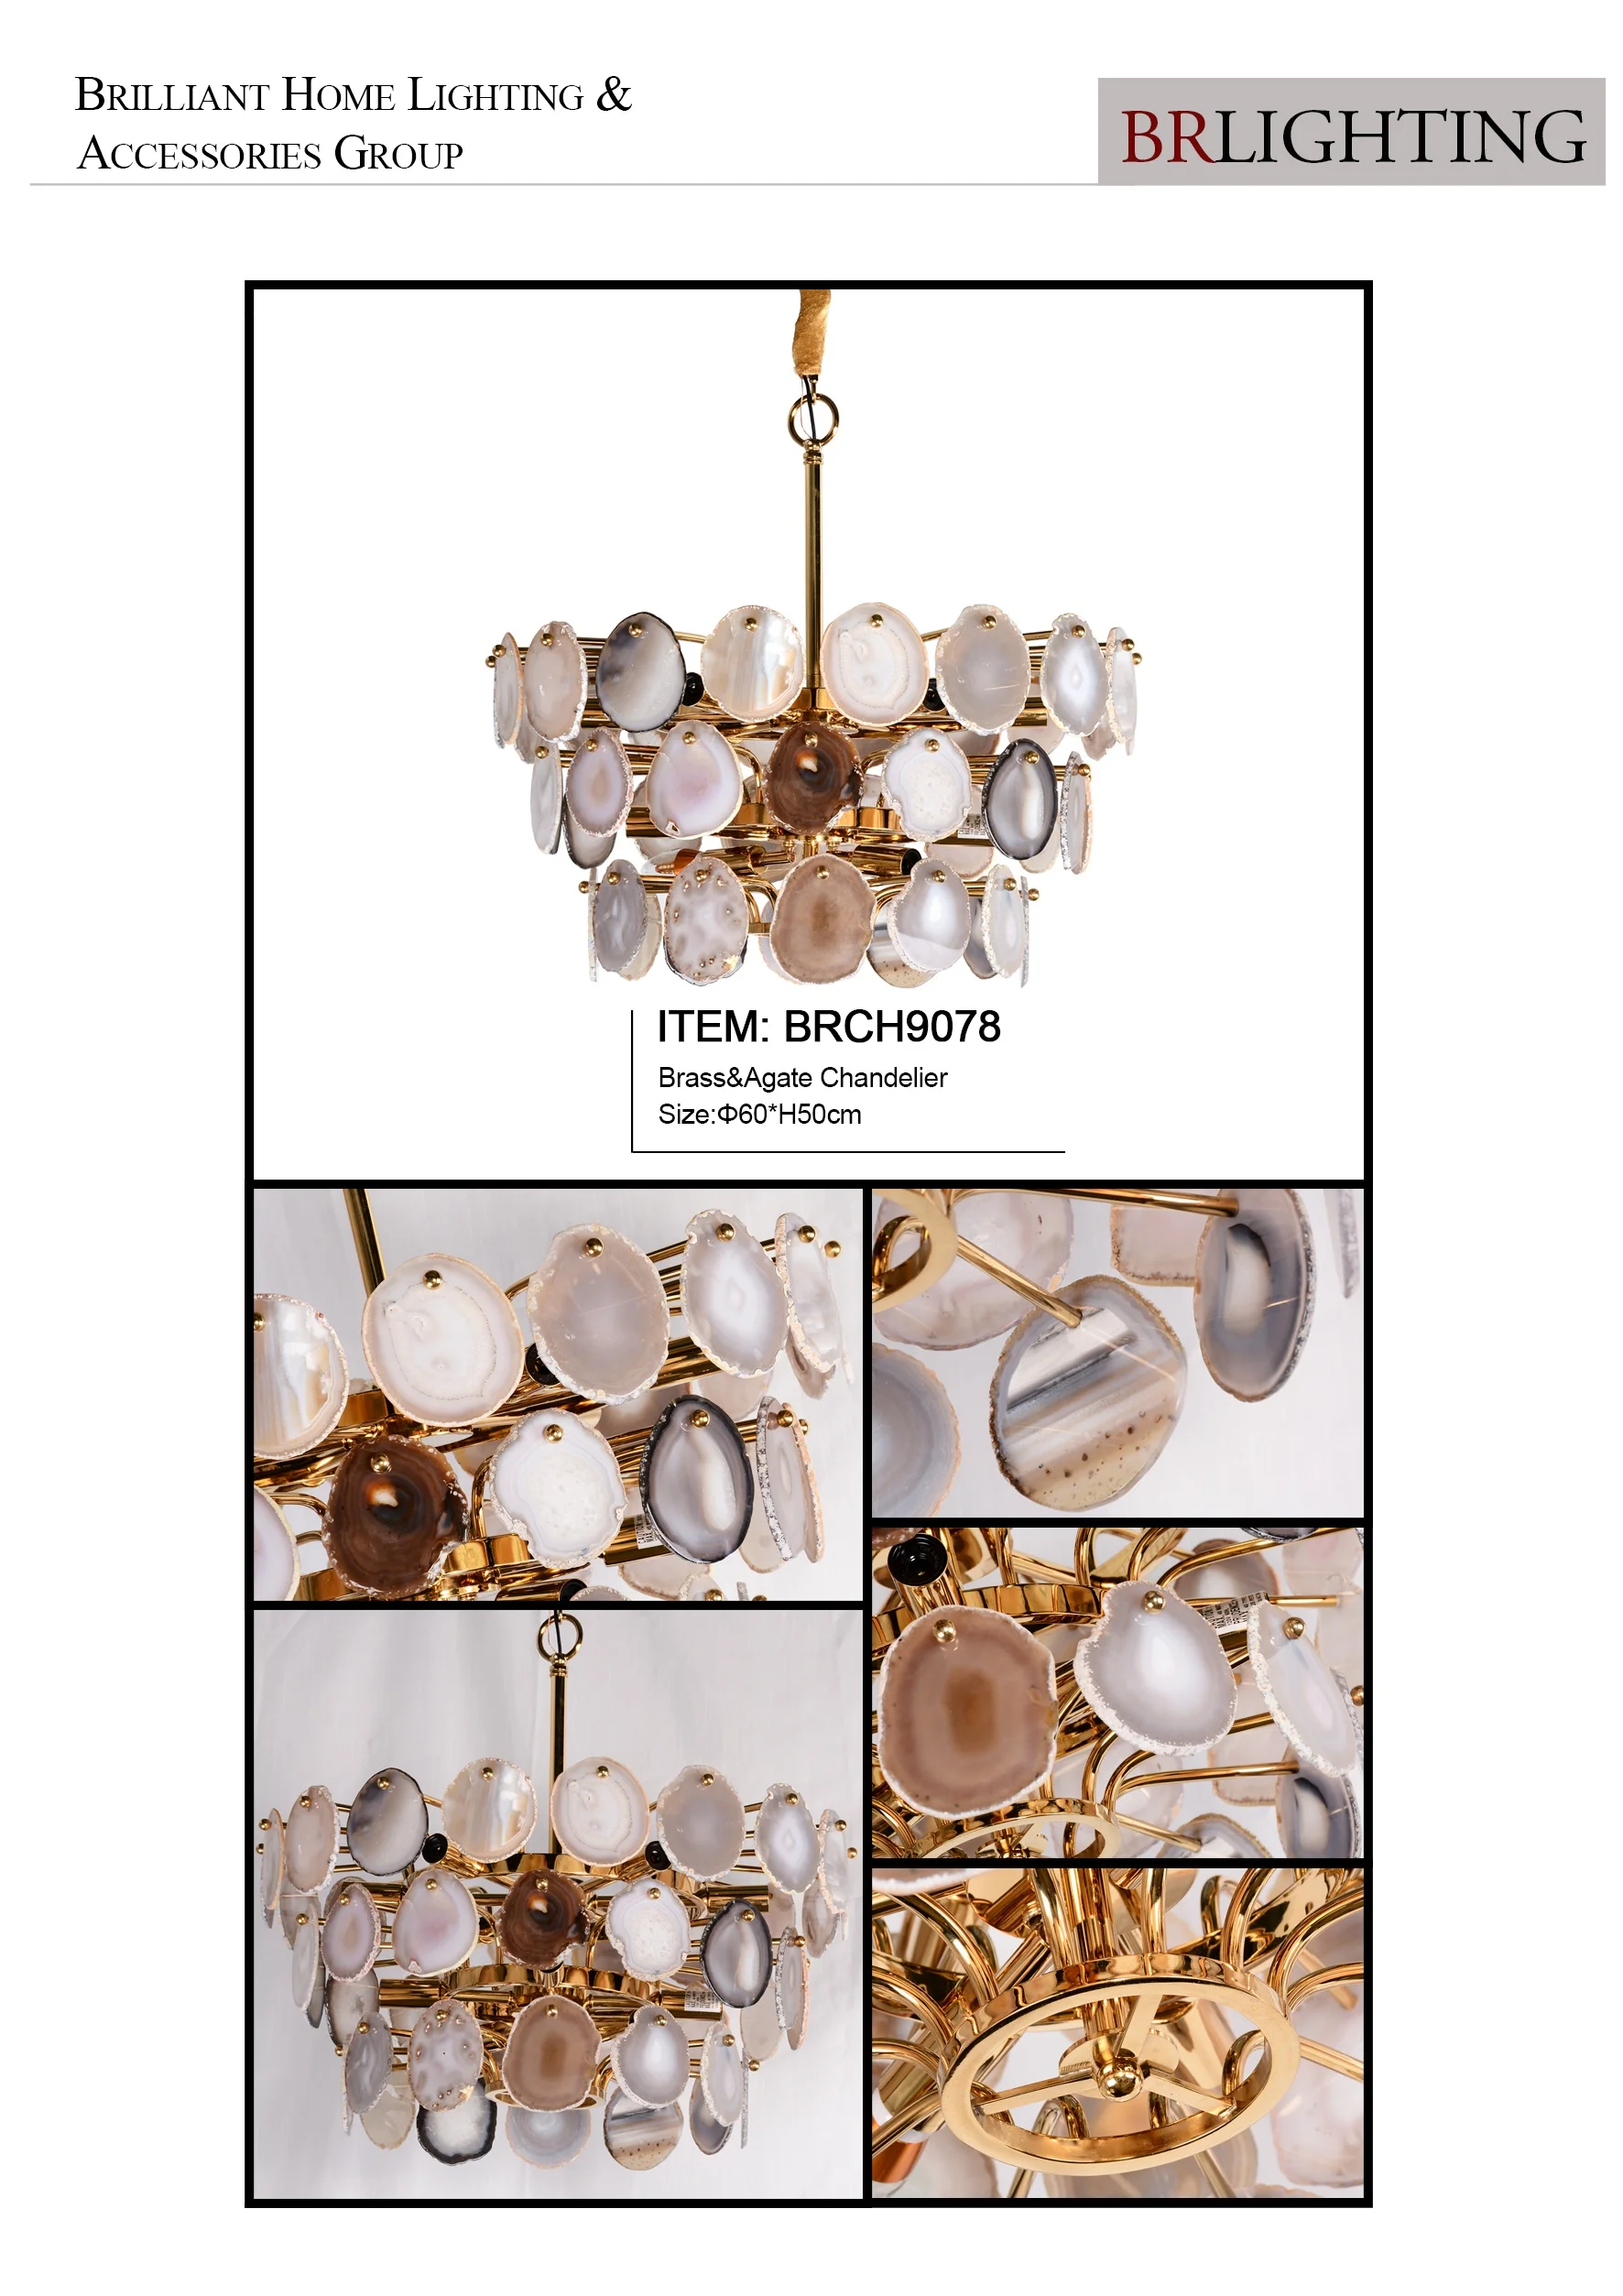 Stone Golden Modern Luxury Turkish Lighting Royal Wedding Centerpiece Colorful Chandelier